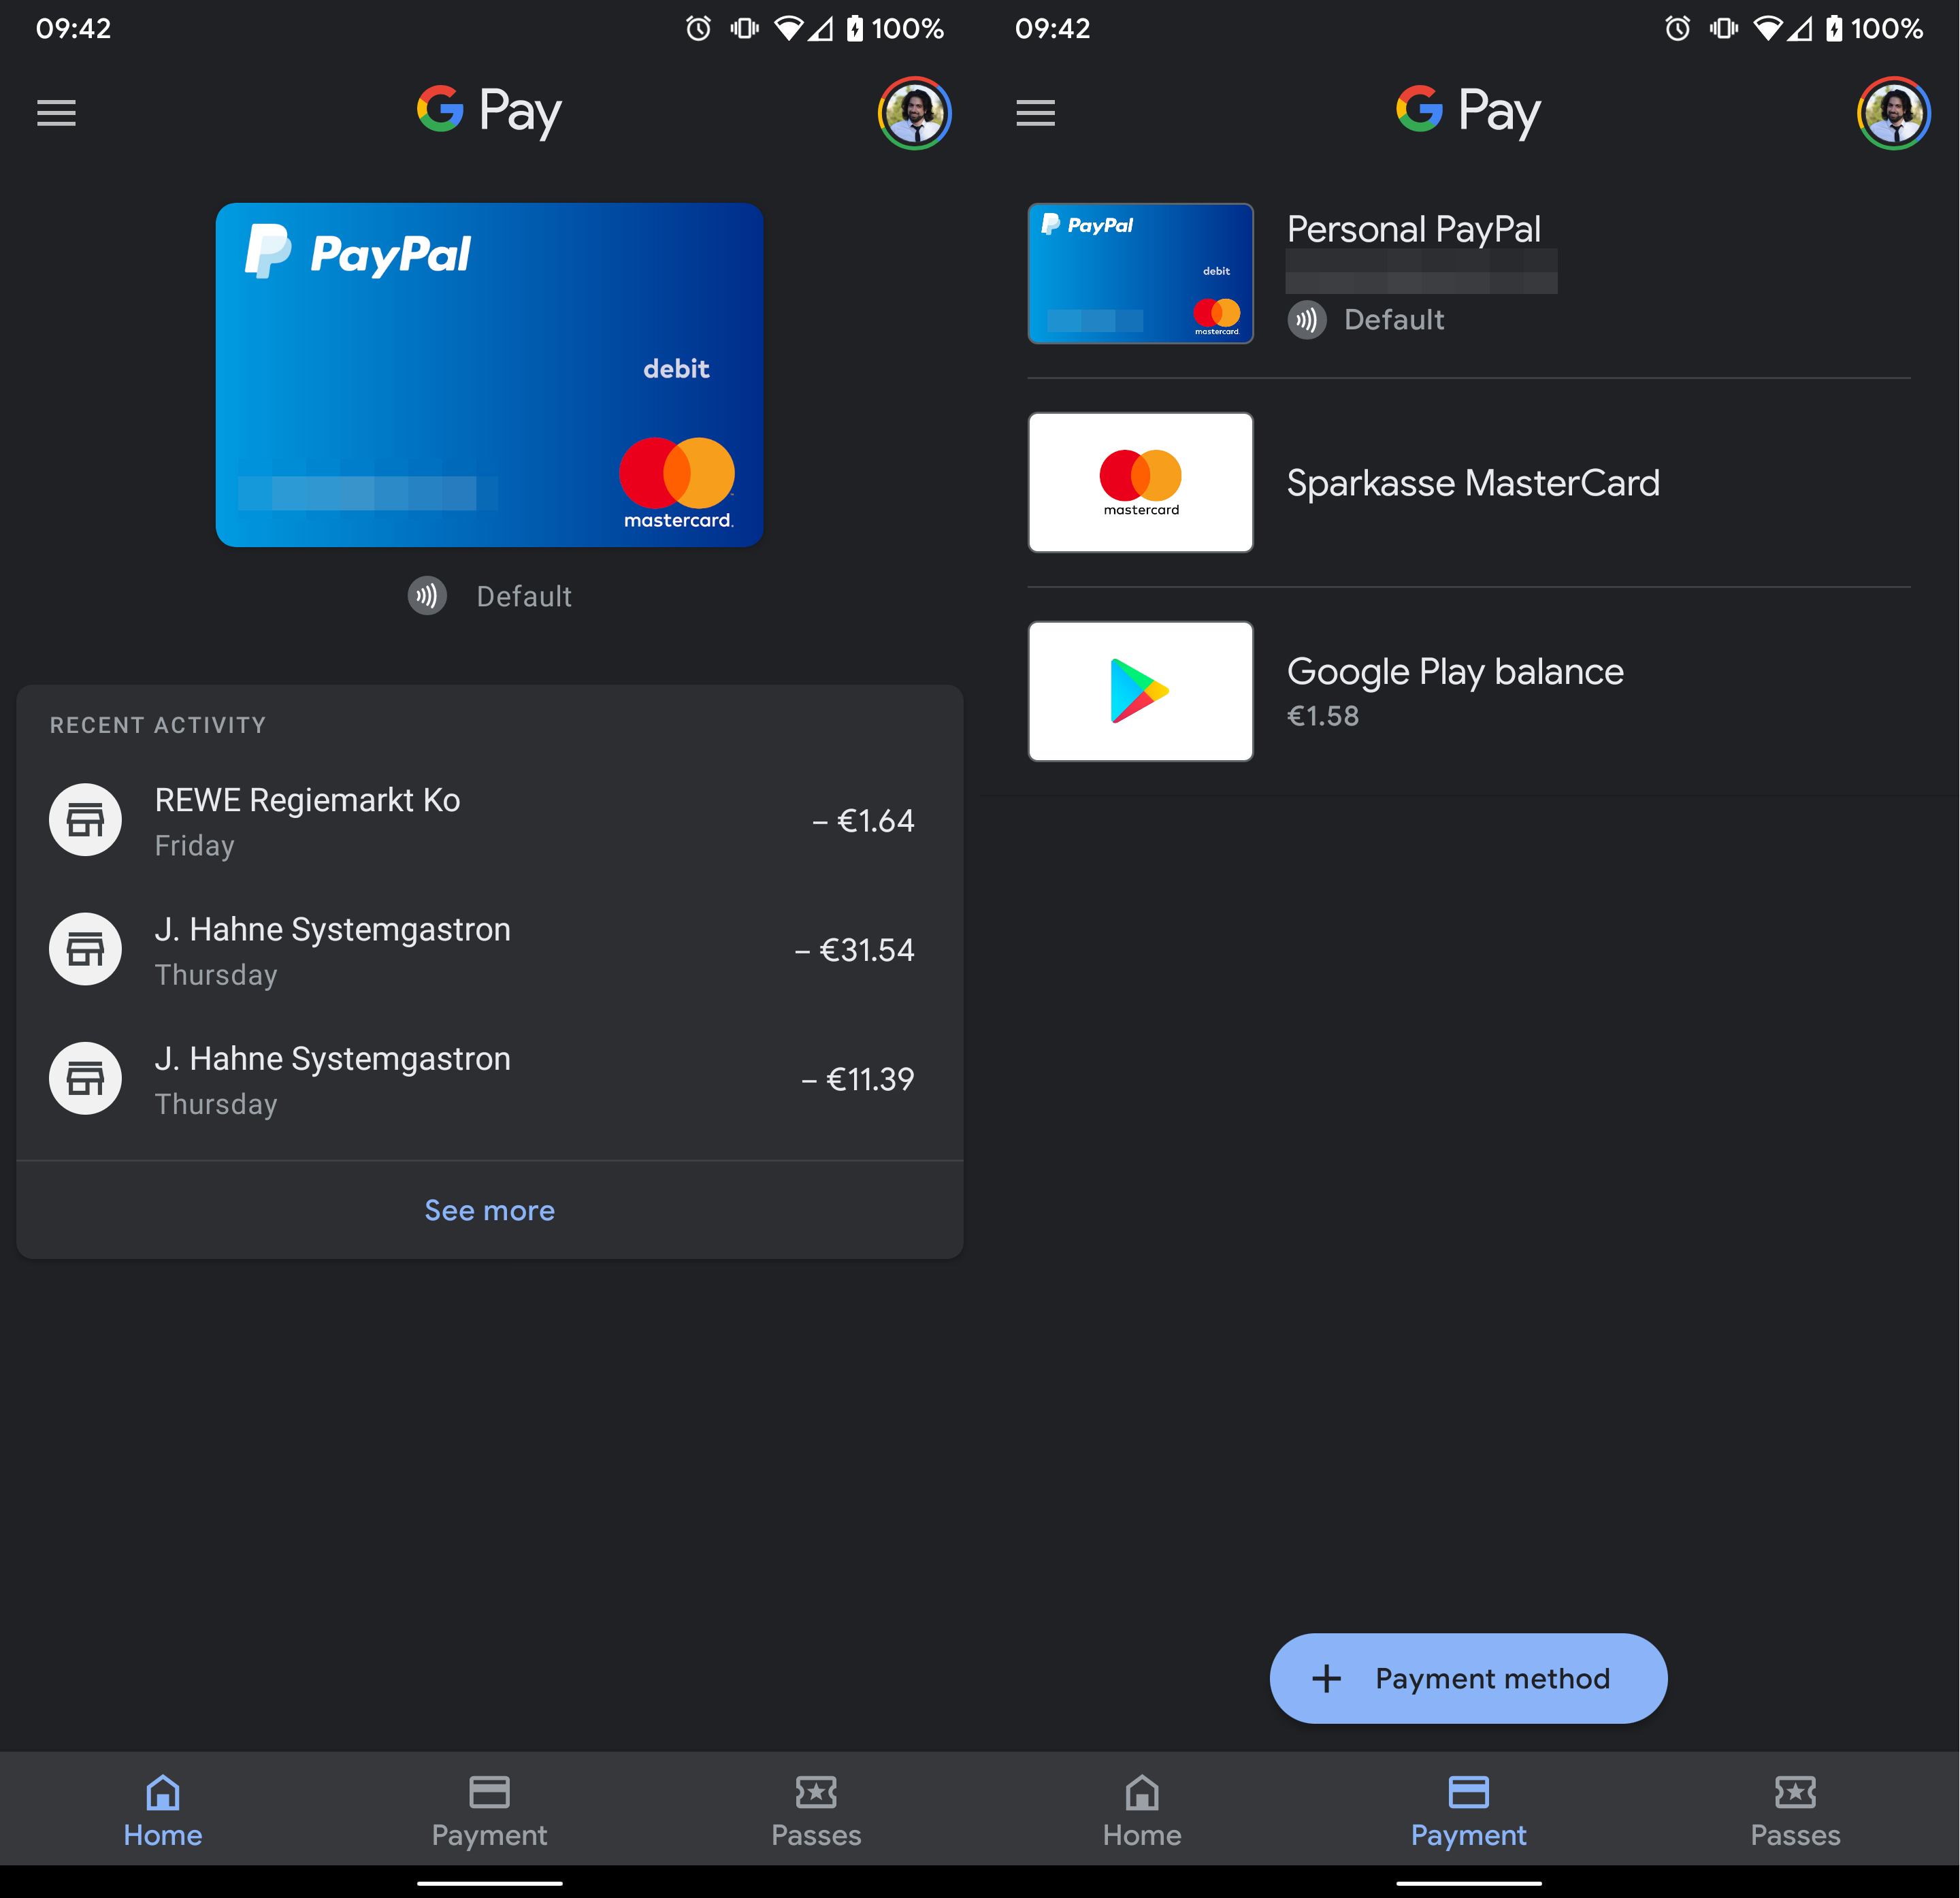 Google Pay segue outros apps e também recebe modo escuro